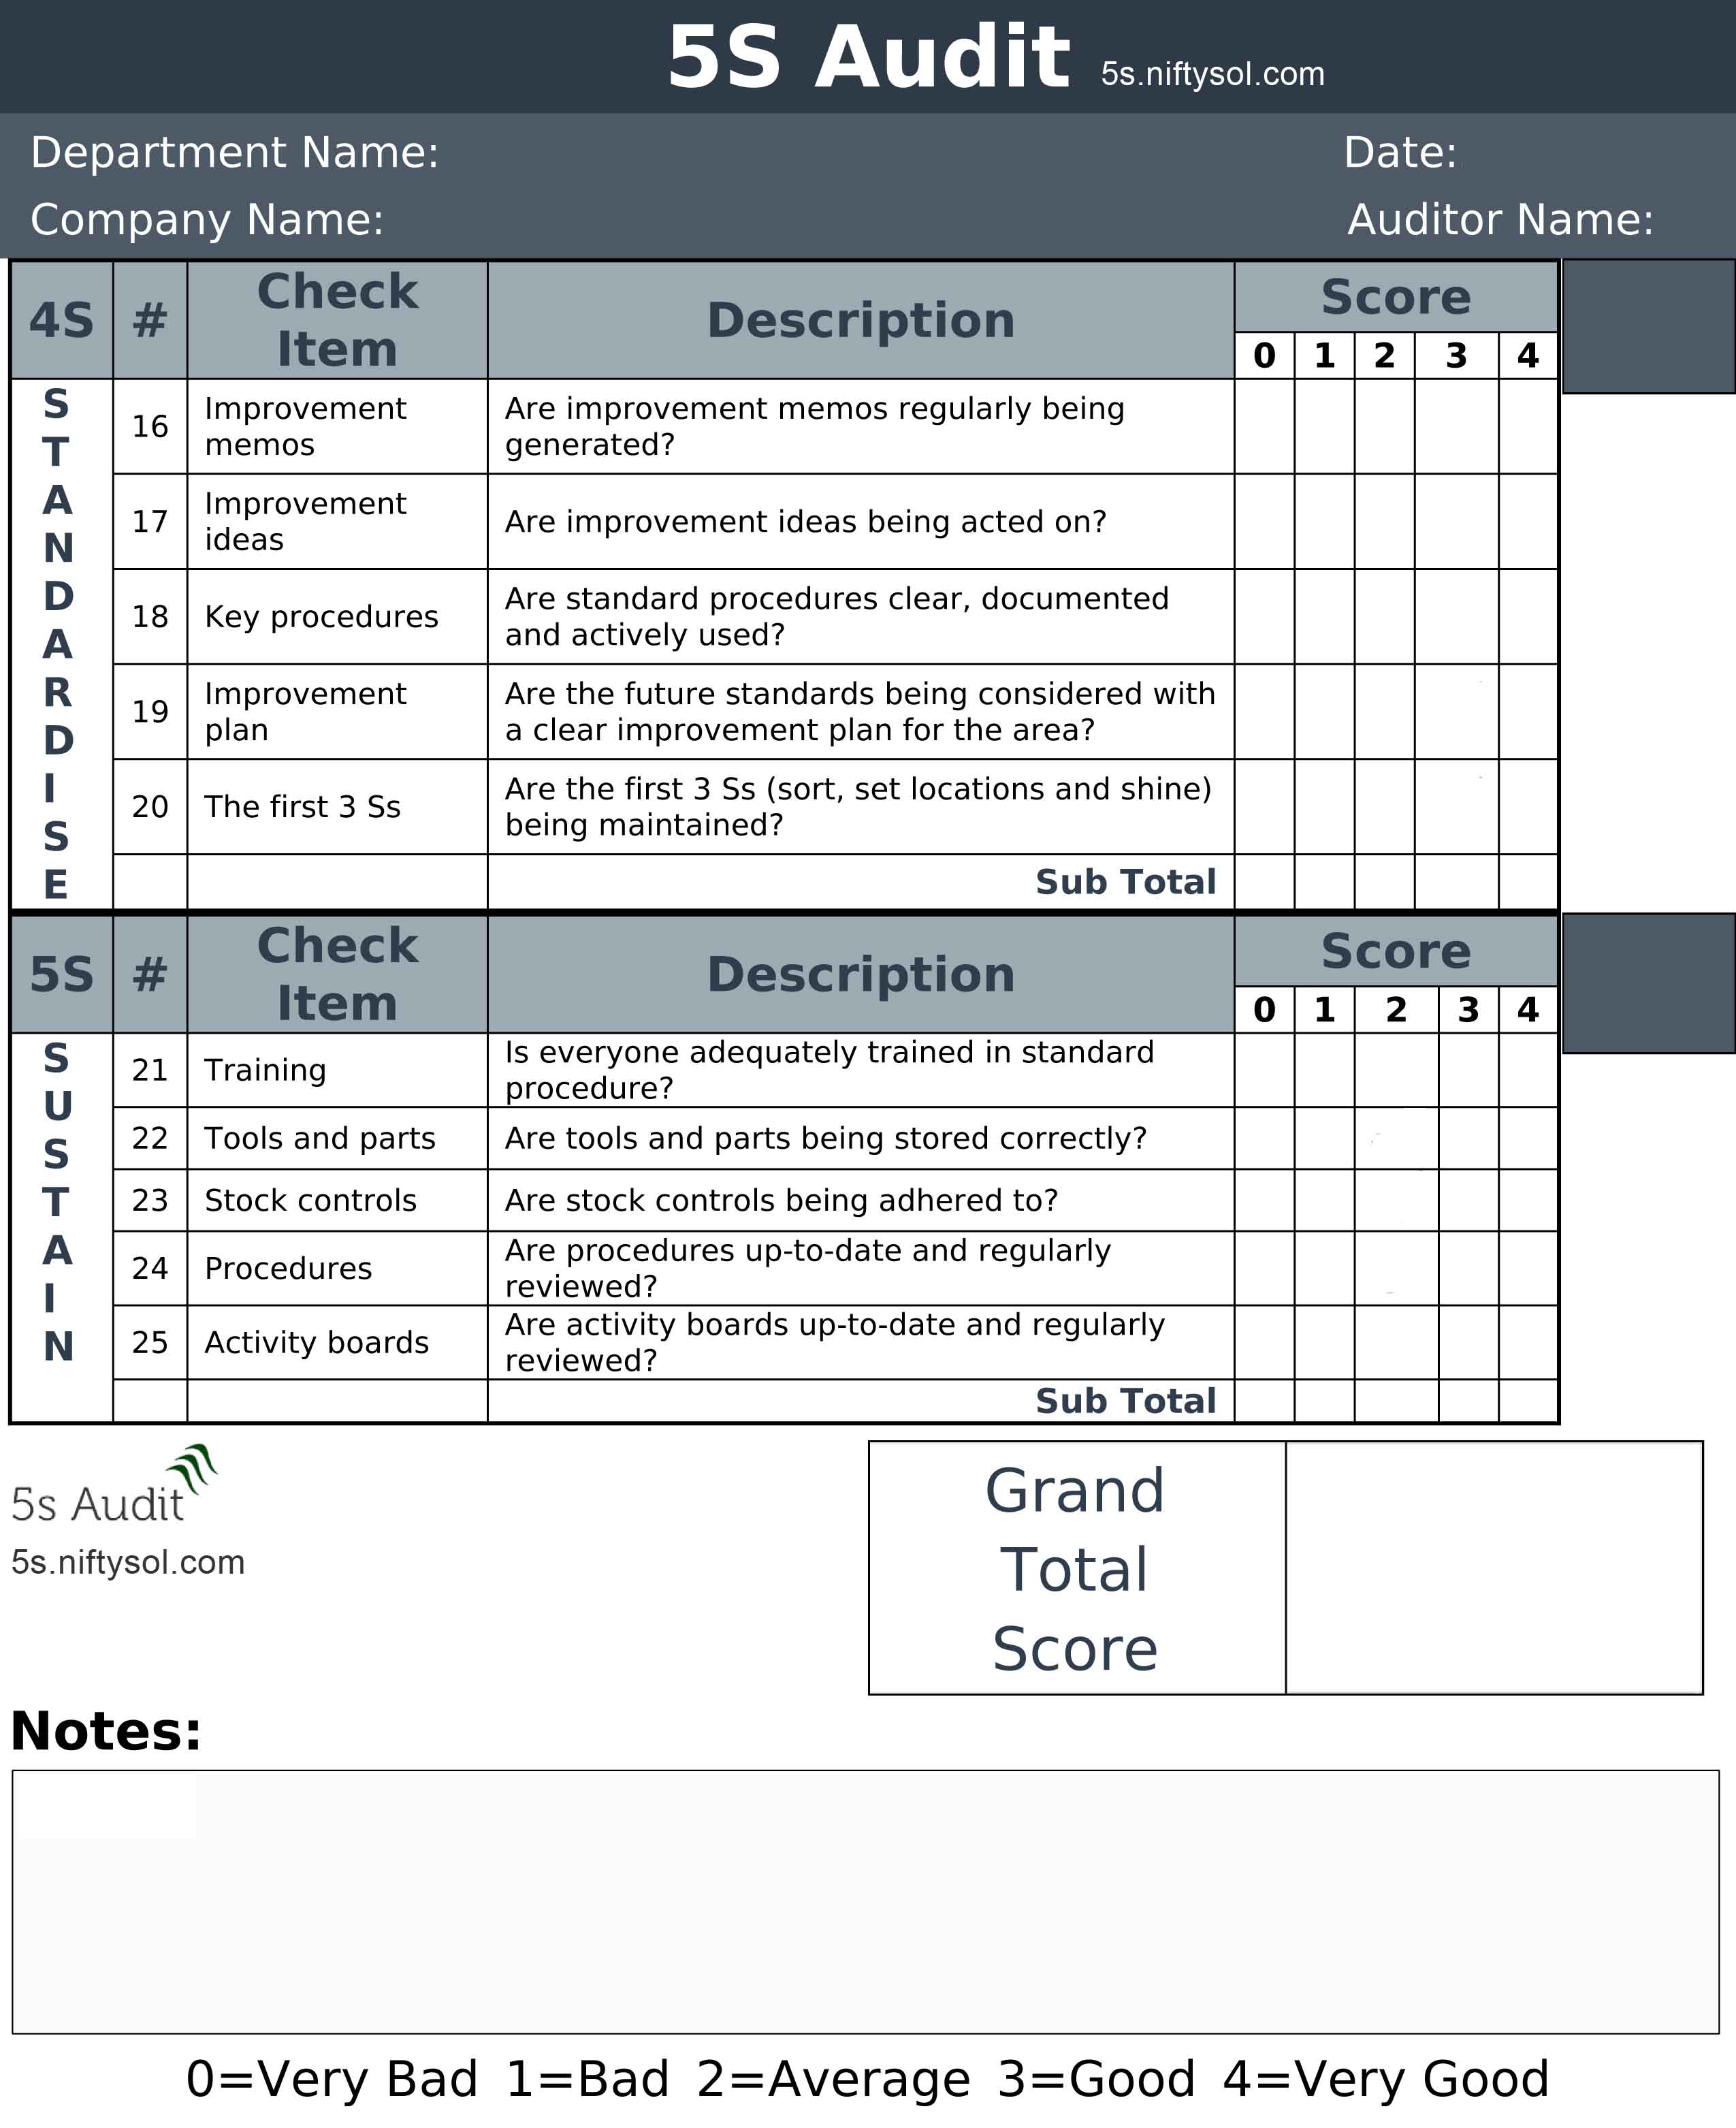 5s audit checklist pdf image